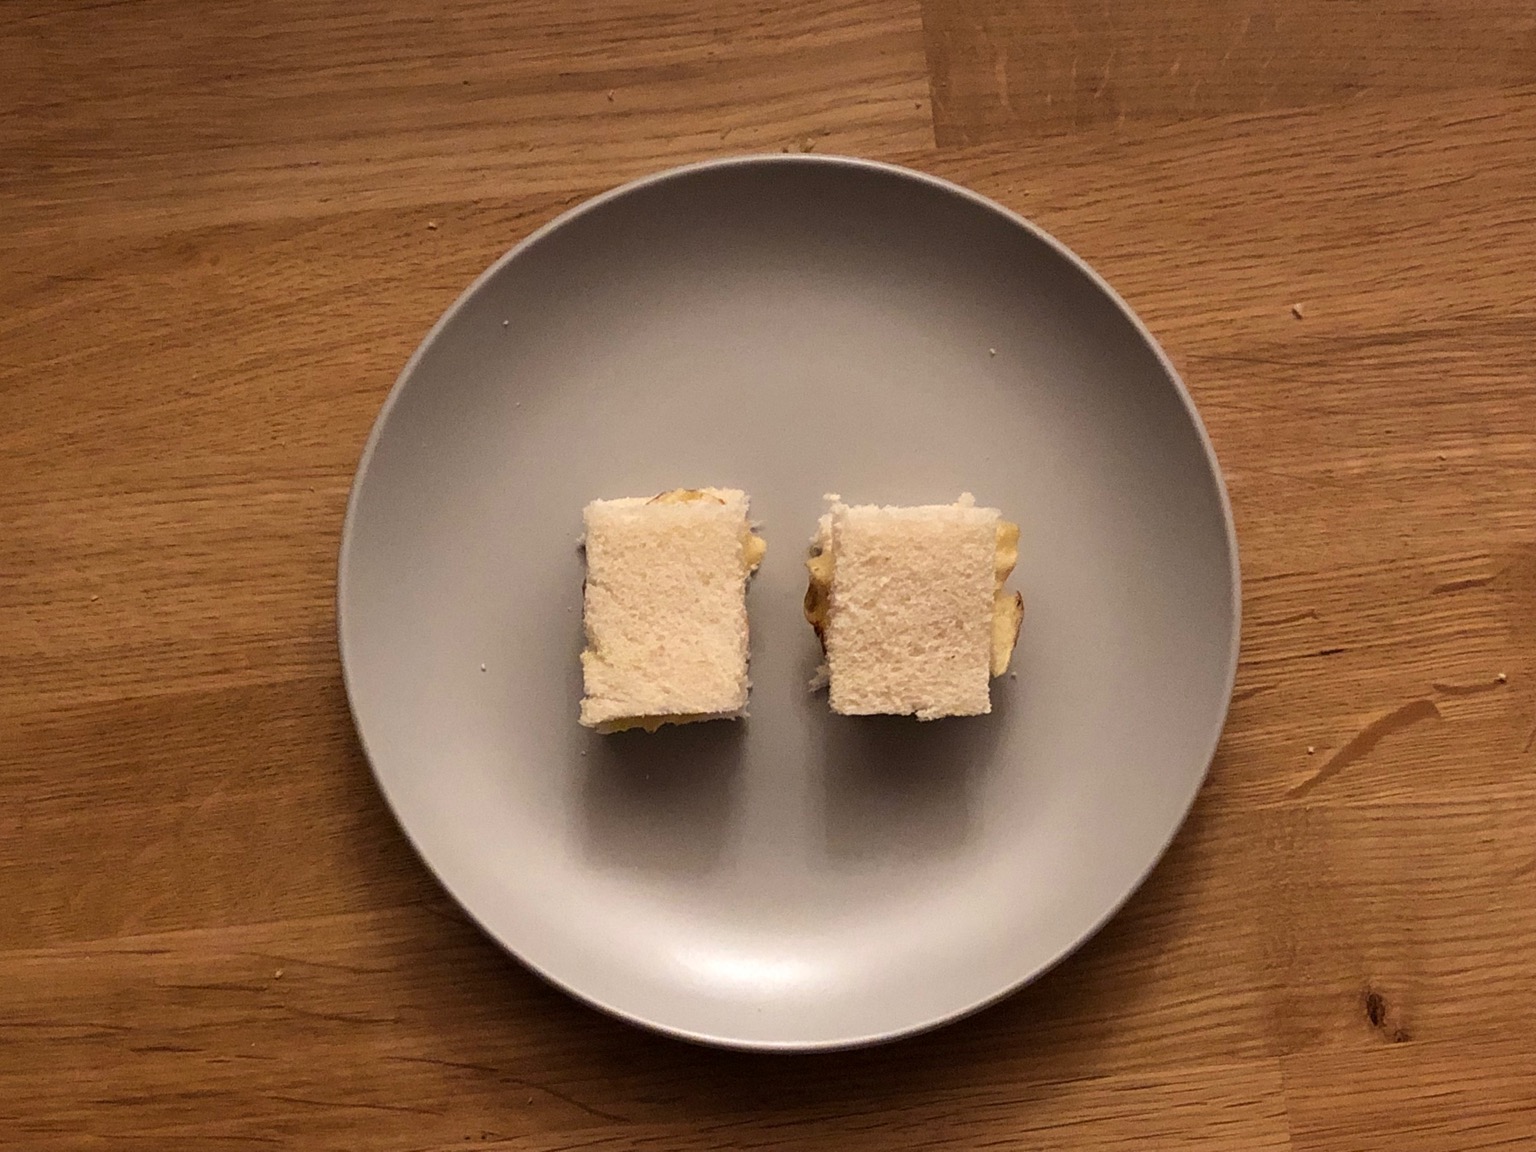 Overhead view of tiny white crisp sandwiches